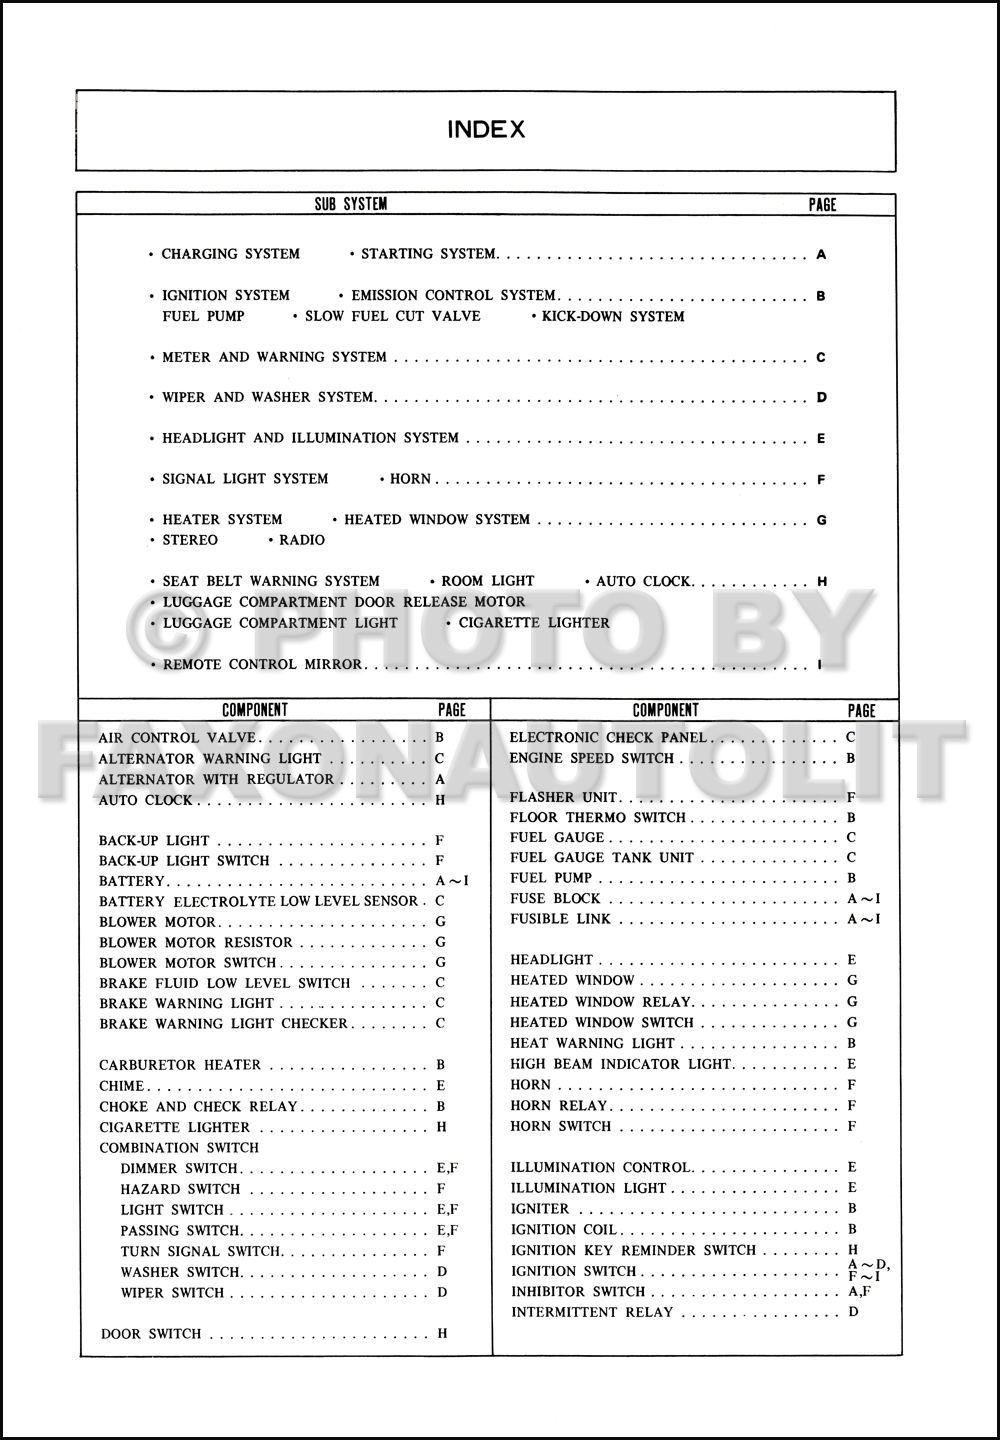 Blower Motor Wiring Diagram Manual from cfd84b34cf9dfc880d71-bd309e0dbcabe608601fc9c9c352796e.ssl.cf1.rackcdn.com